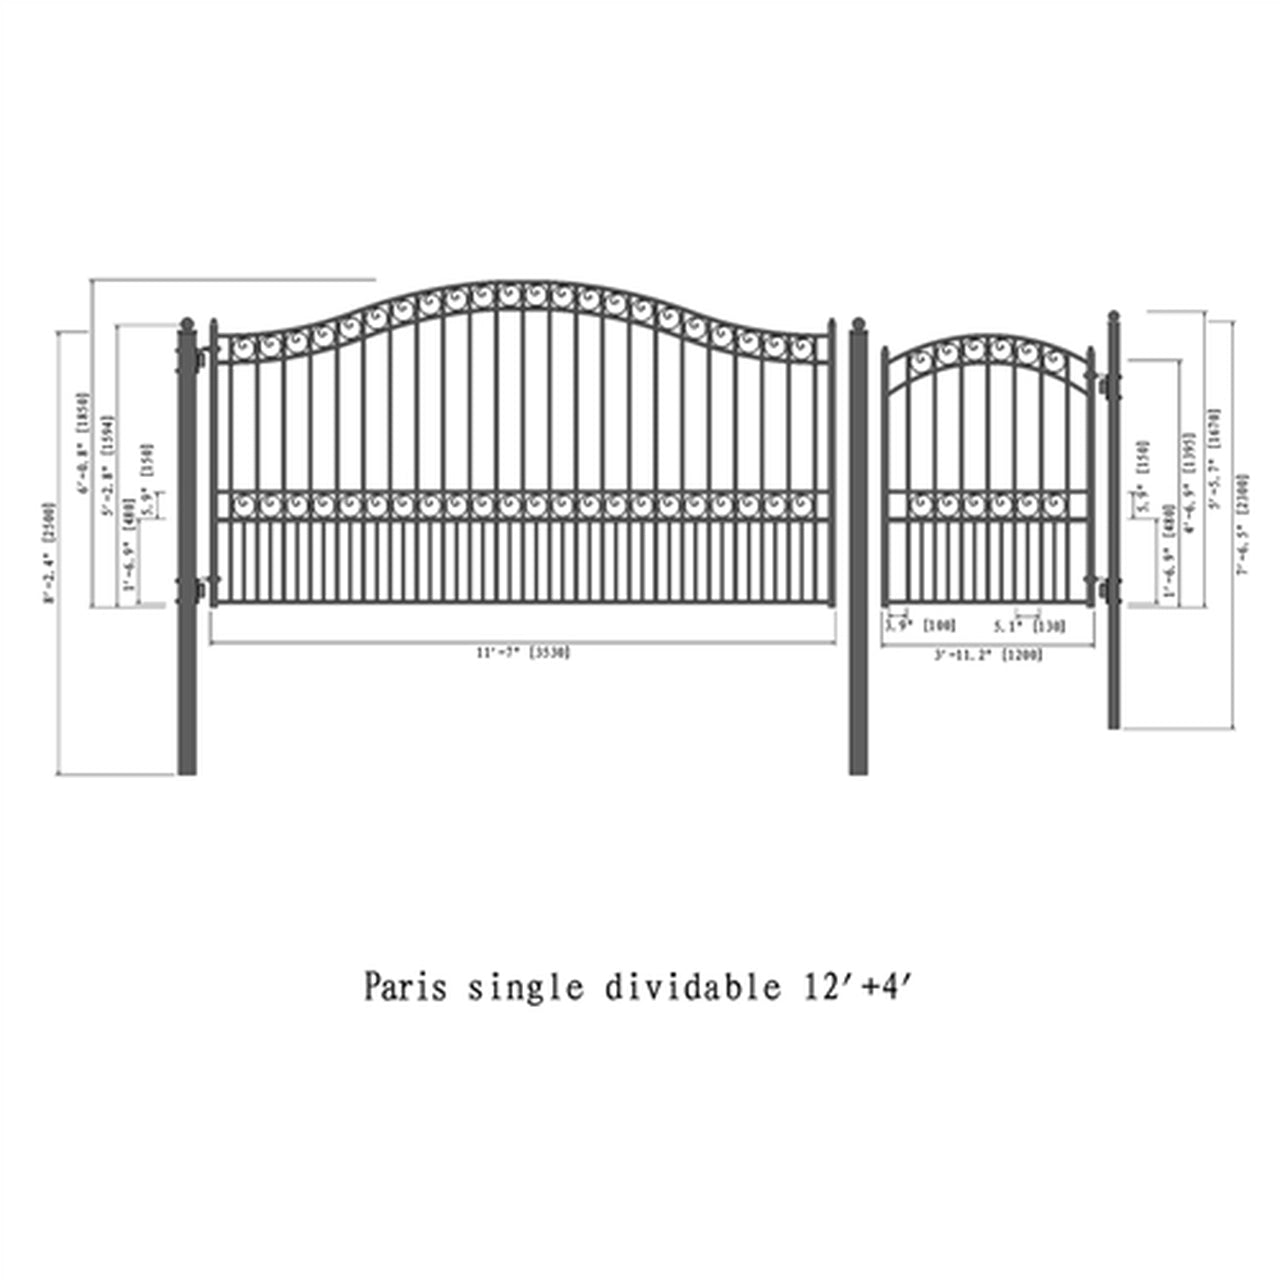 Aleko Steel Single Swing Driveway Gate - PARIS Style - 12 ft with Pedestrian Gate - 5 ft